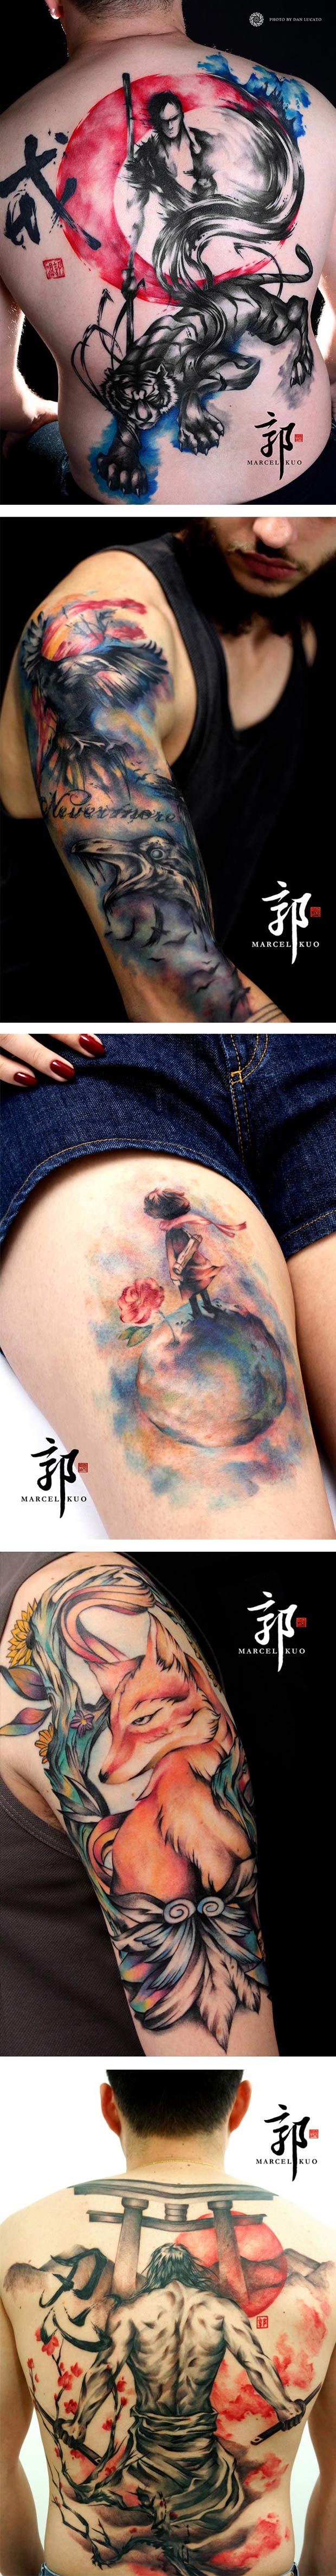 tatuagens-marcel-kuo-aquarela